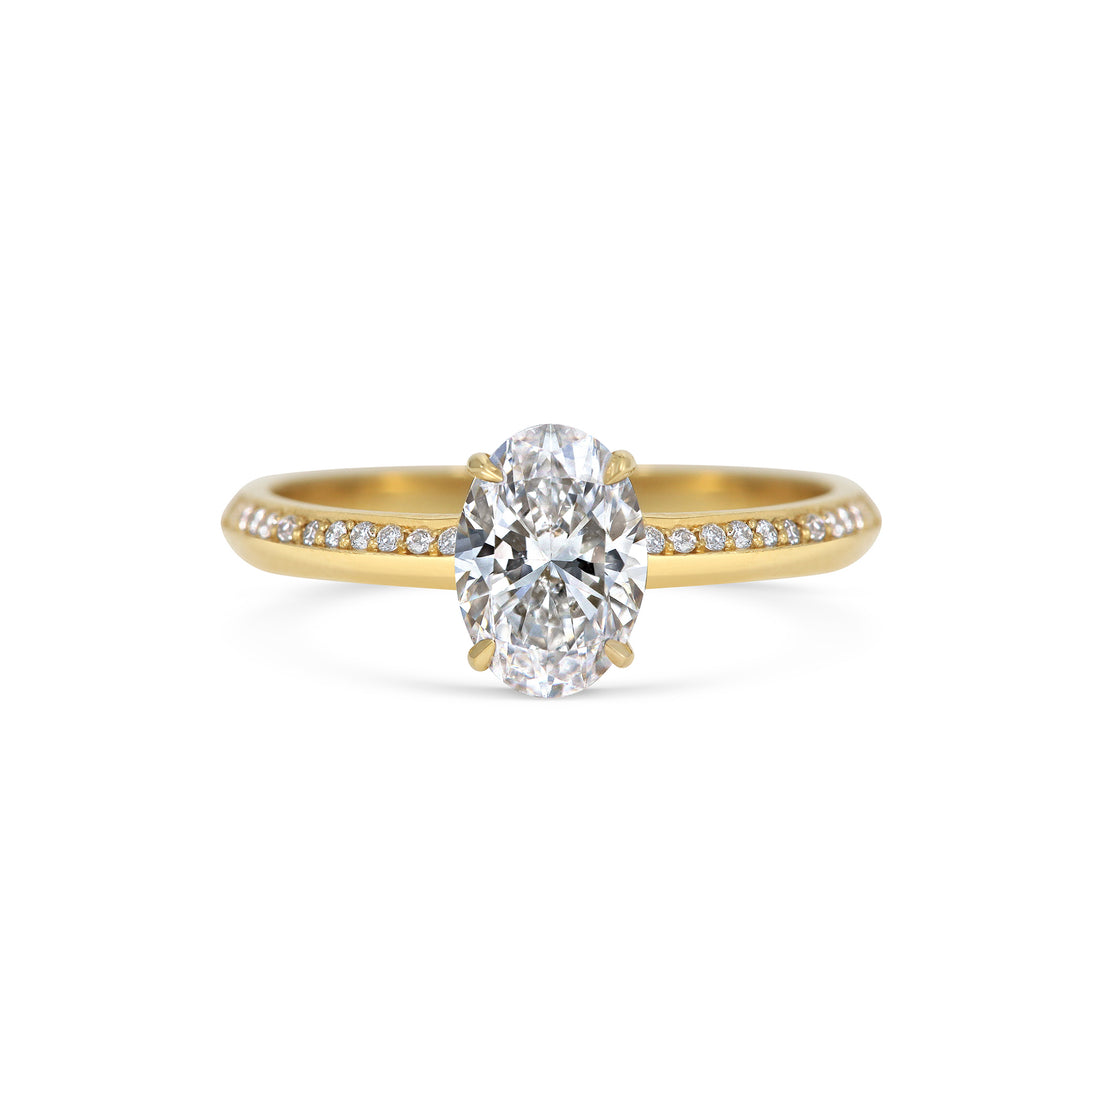  Auriga Oval Diamond Ring by Rachel Boston | The Cut London